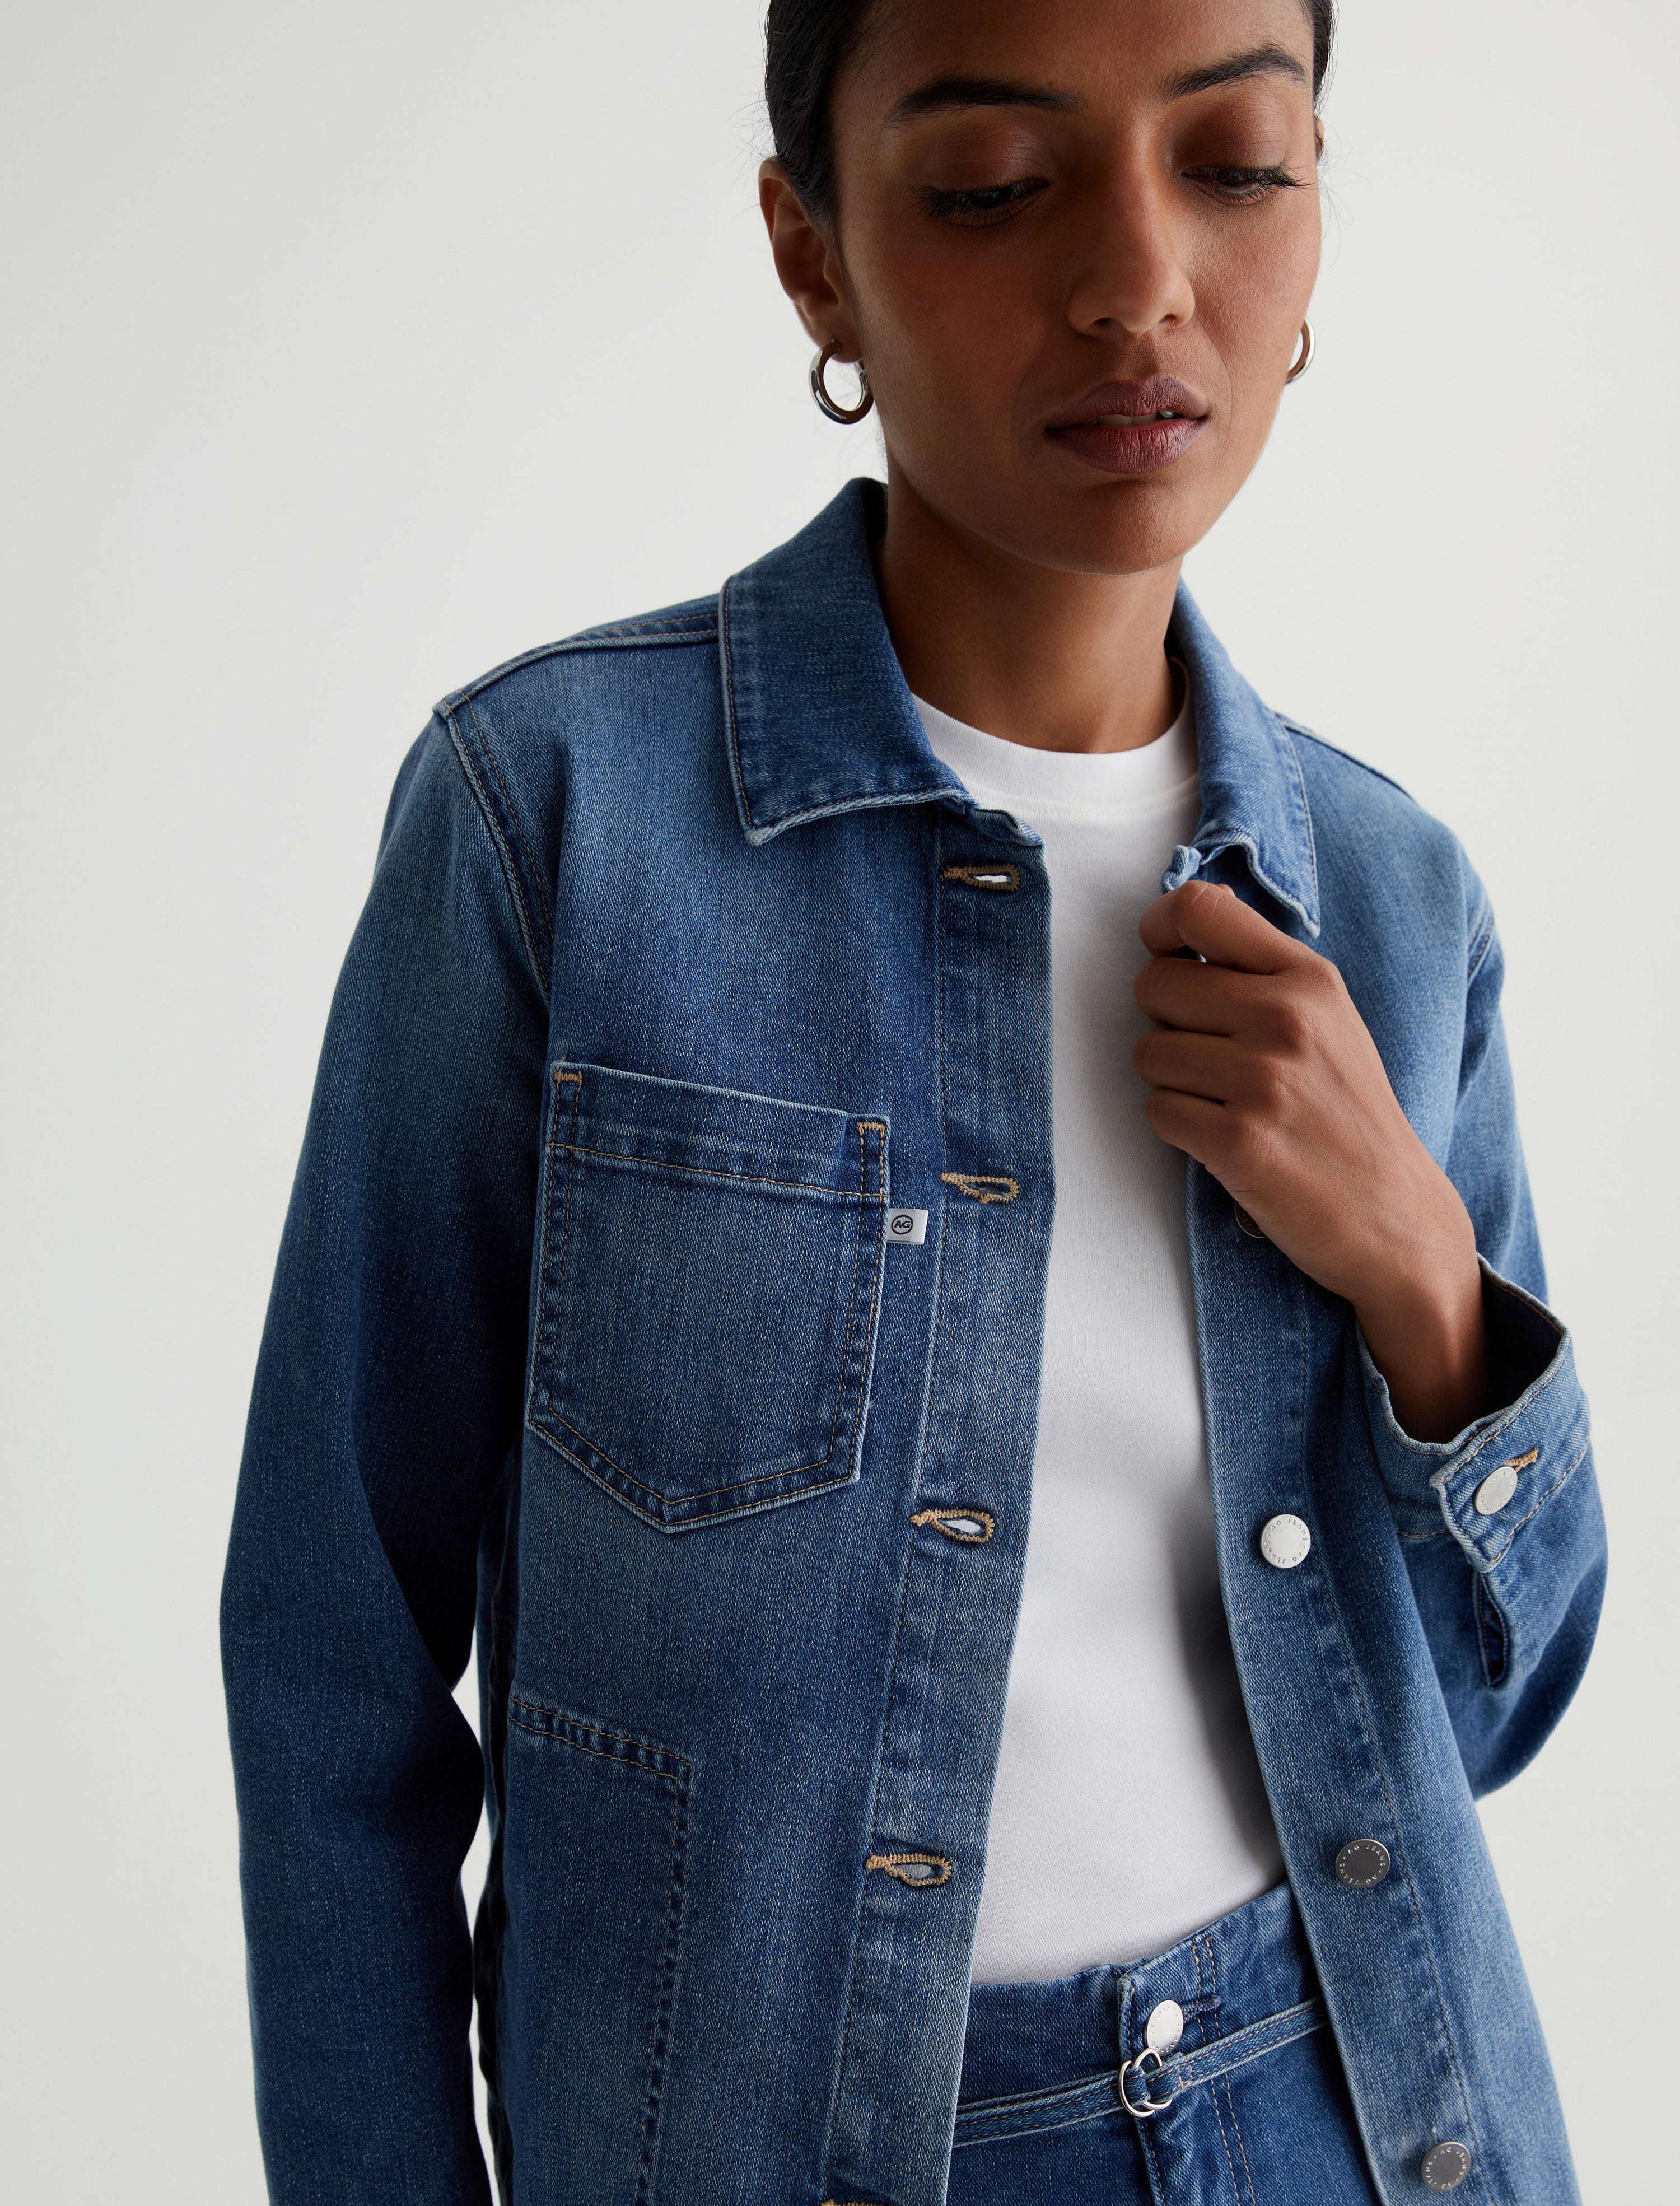 Buy TEXTURED FAB Full Sleeves Solid Jacket Women|Denim Jacket for Women| Comfortable Women Jacket, Women's Denim Jackets (L, Light Blue) at Amazon.in